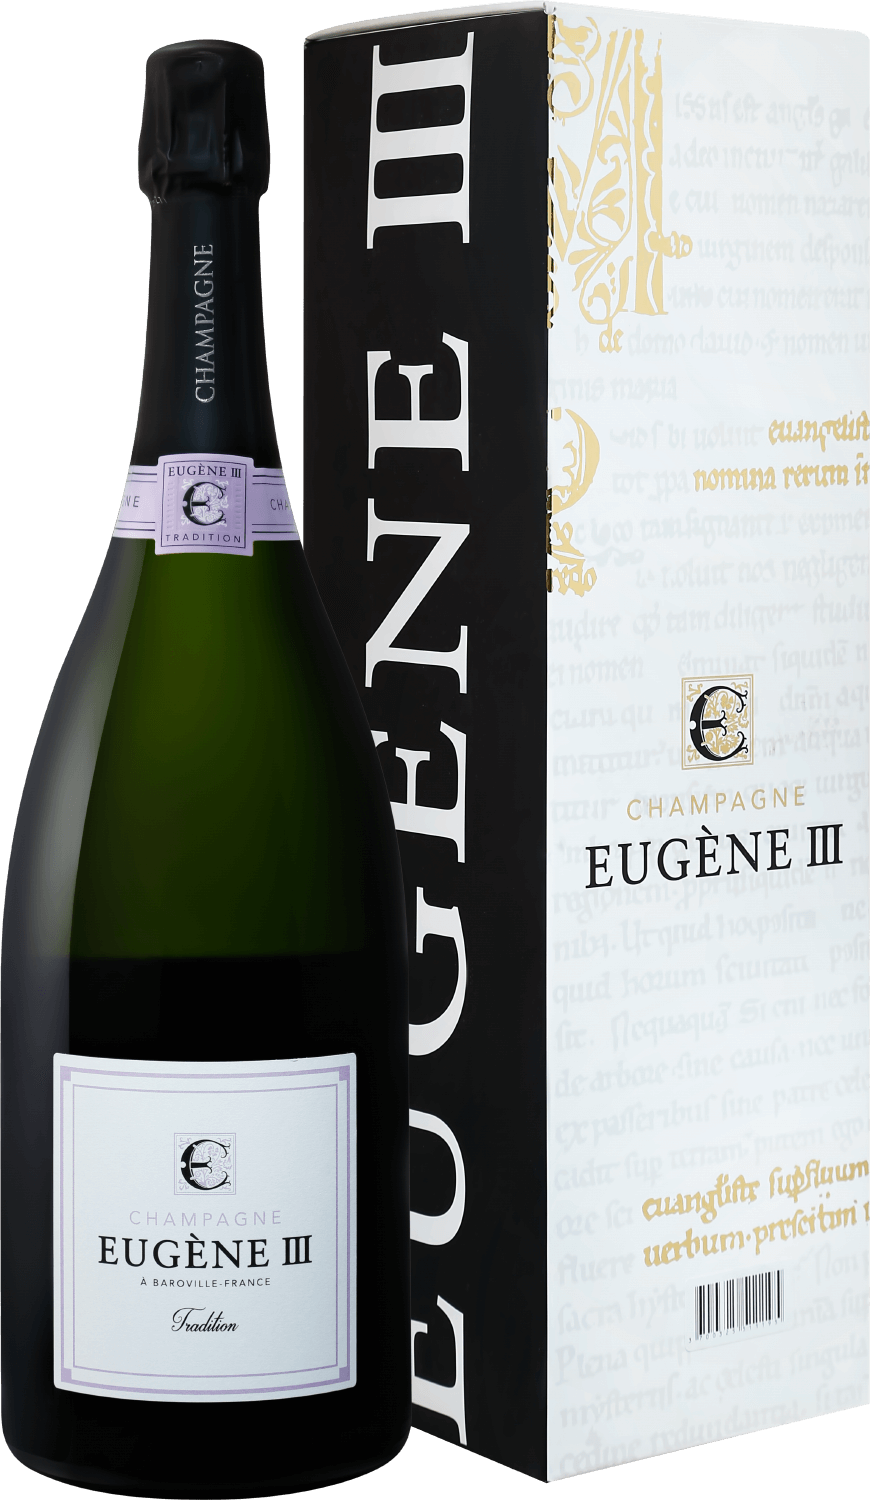 Eugene III Tradition Brut Champagne АOC Coopérative Vinicole de la Région de Baroville (gift box) eugene iii tradition brut champagne аoc coopérative vinicole de la région de baroville gift box